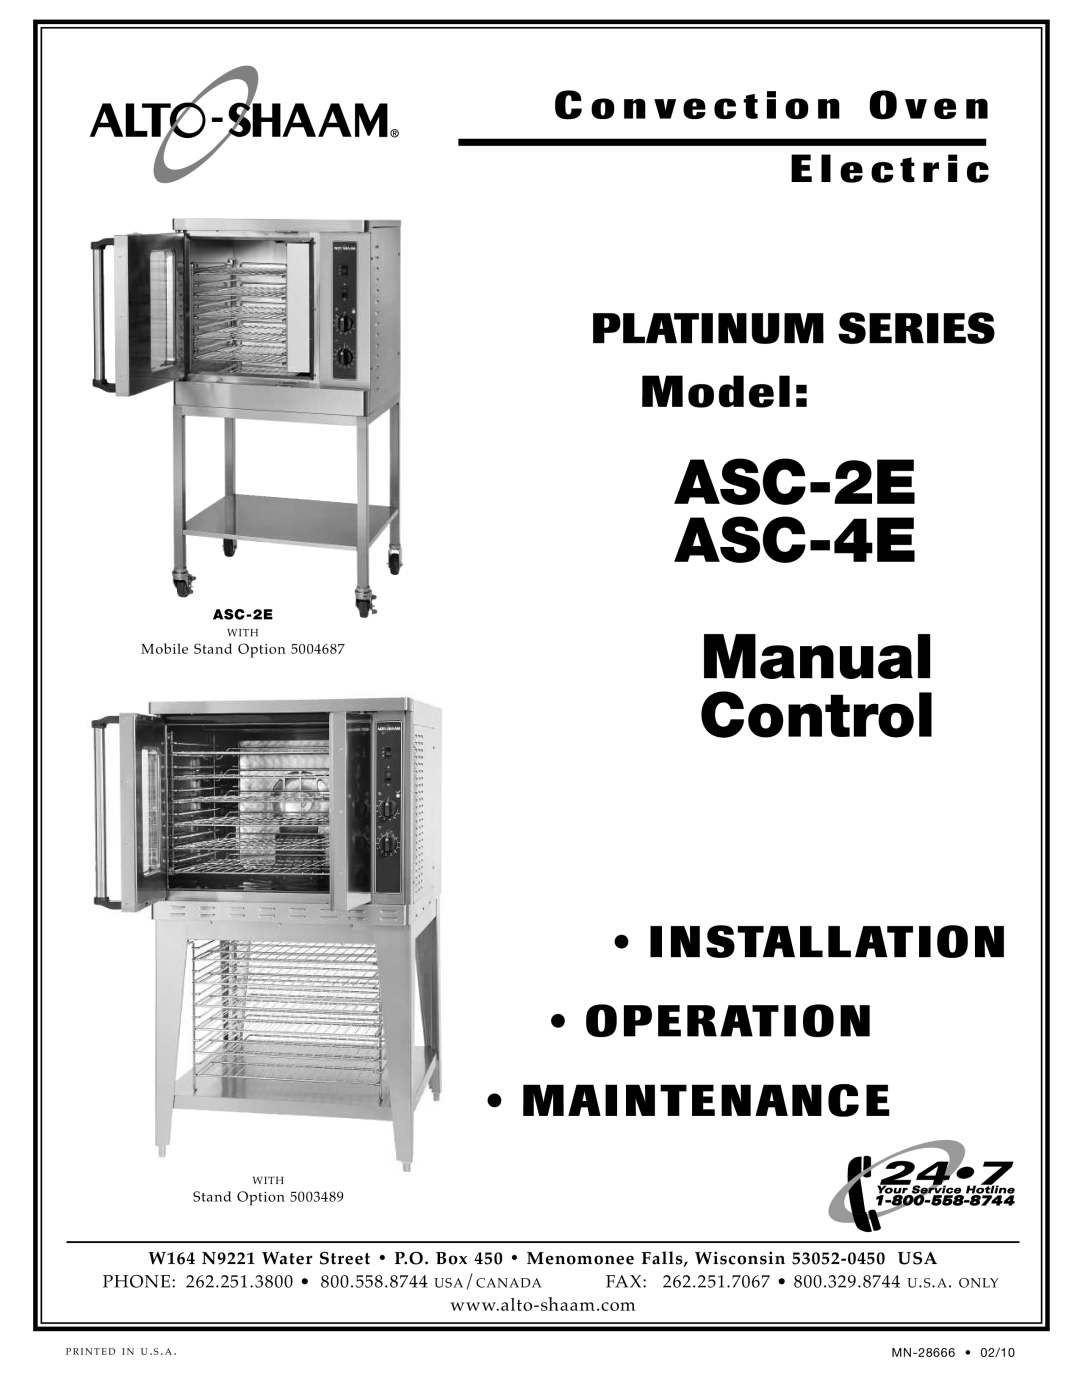 Alto-Shaam manual Model, Installation Operation Maintenance, ASC-2E ASC-4E Electronic Control, with 